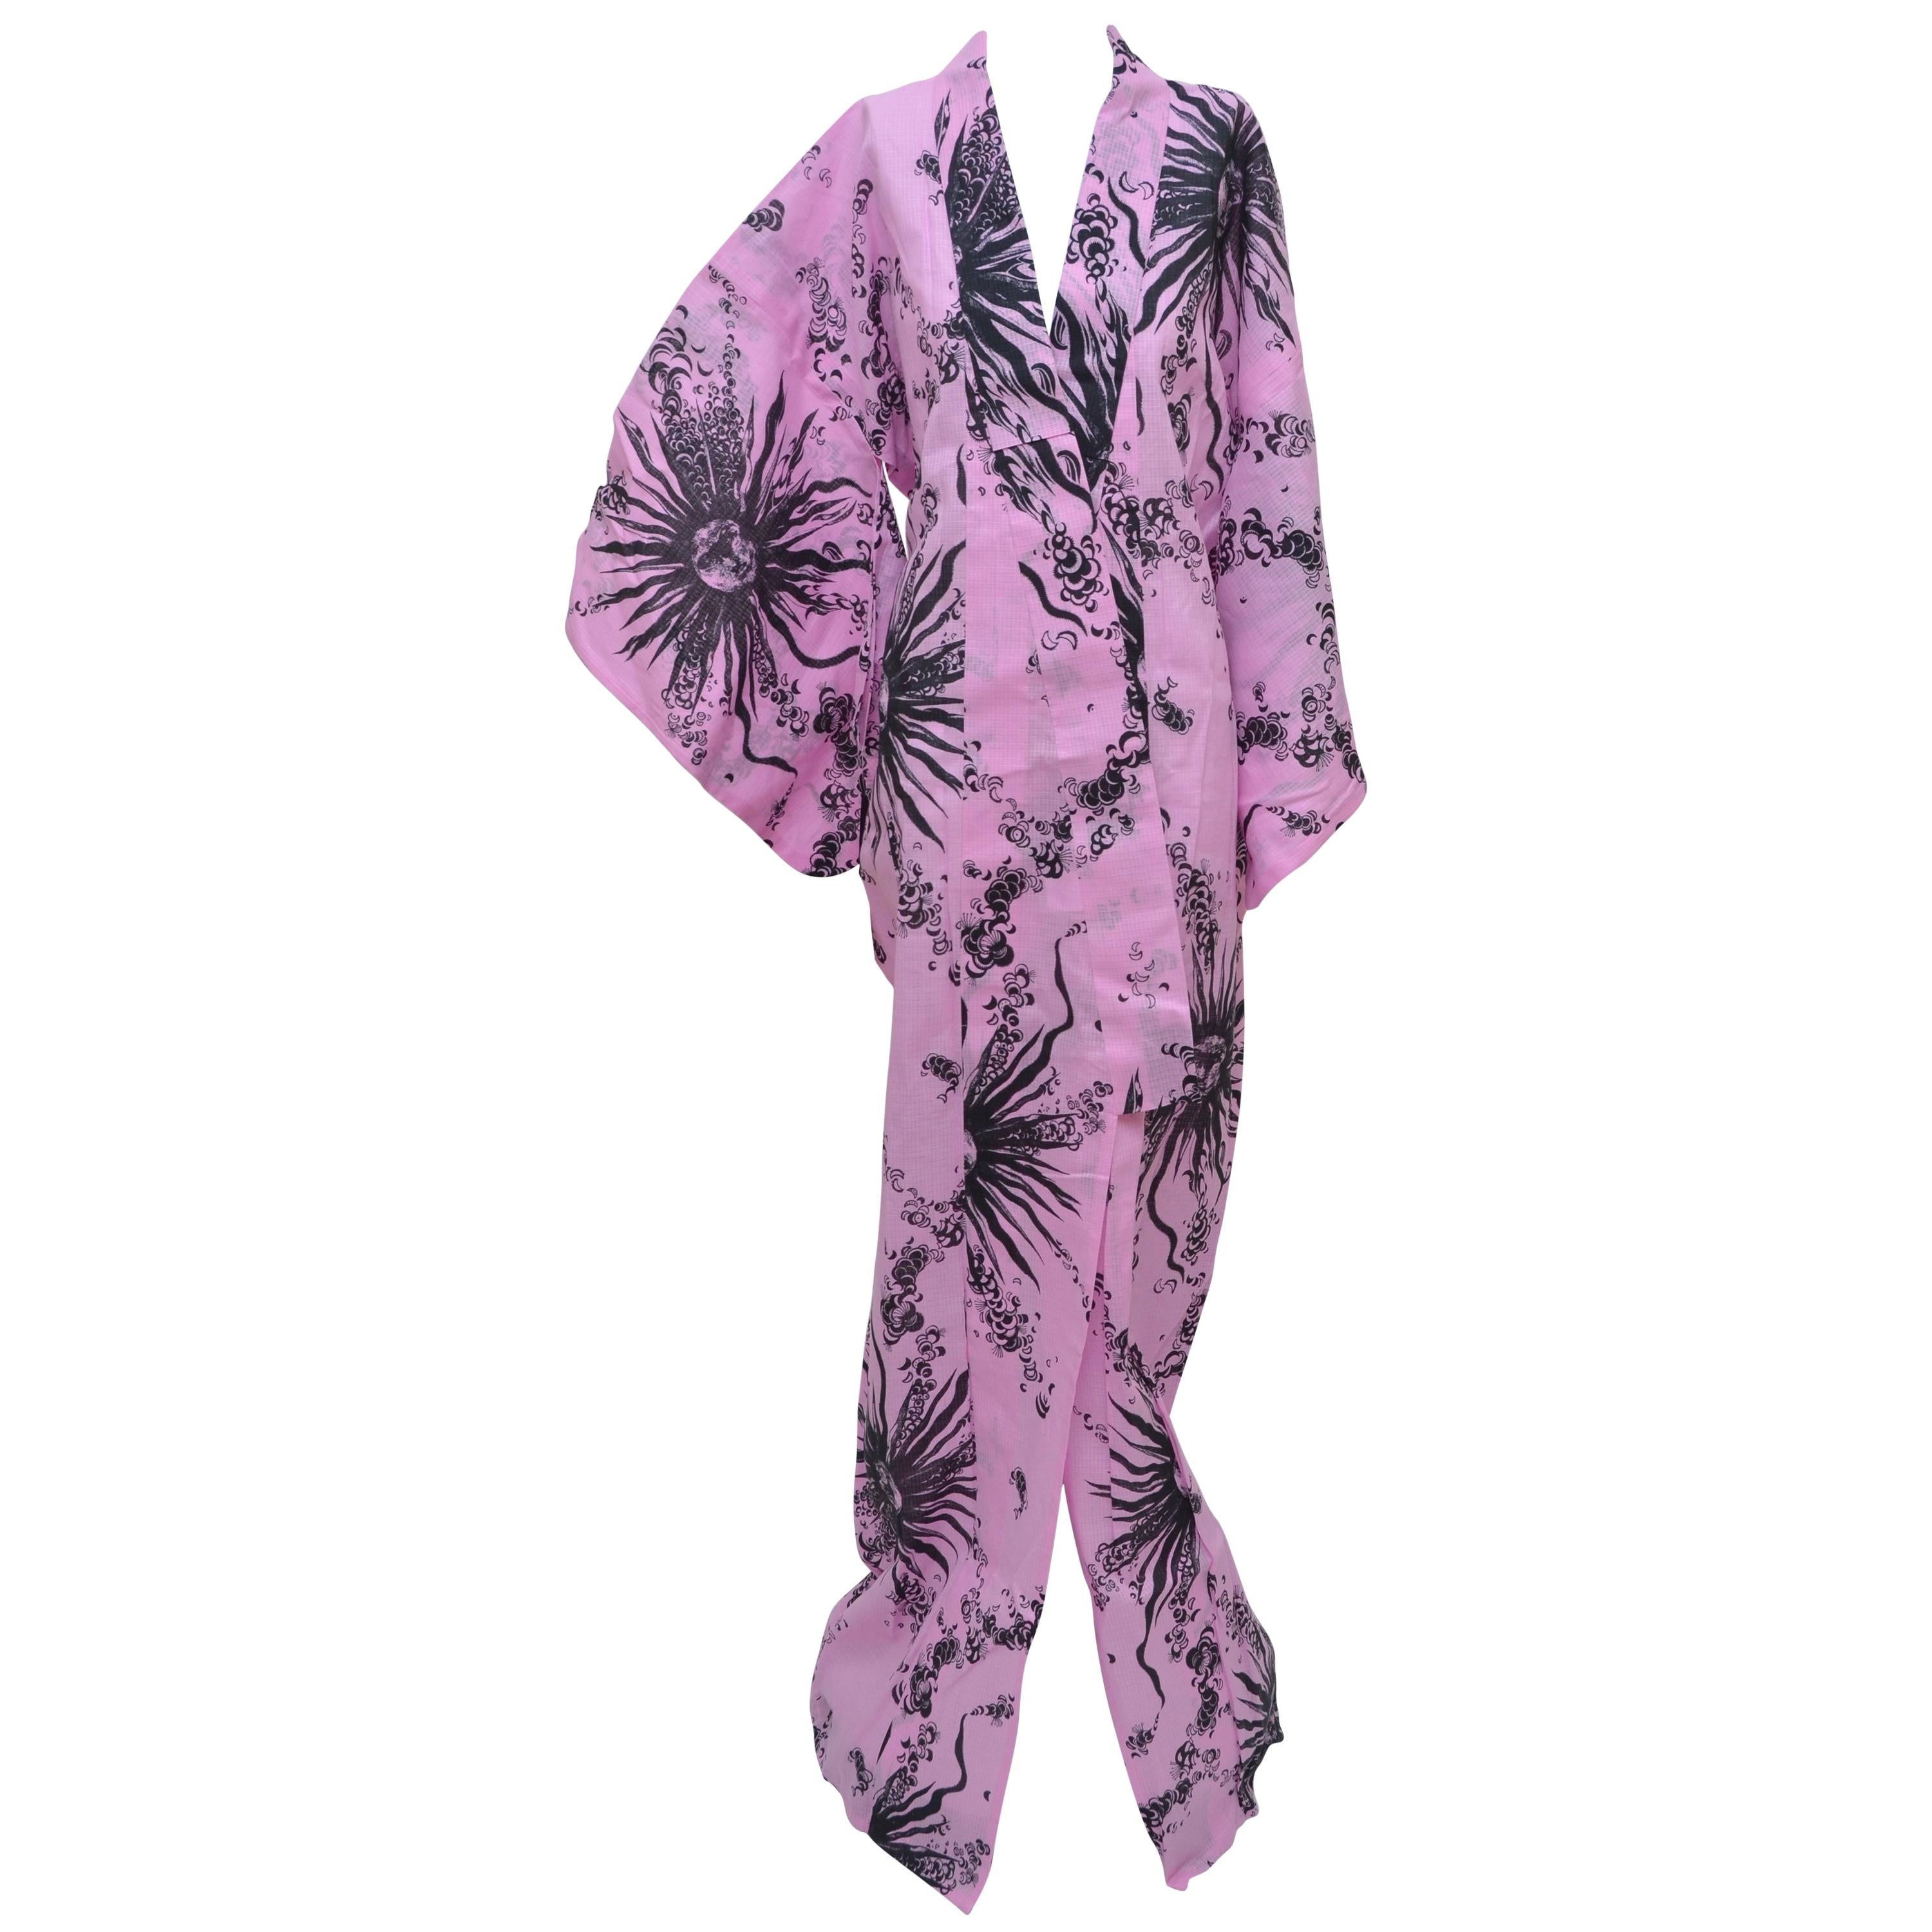  Fausto Puglisi Pink Yukata Kimono Limited Edition Of  Only 50 Pieces  NEW